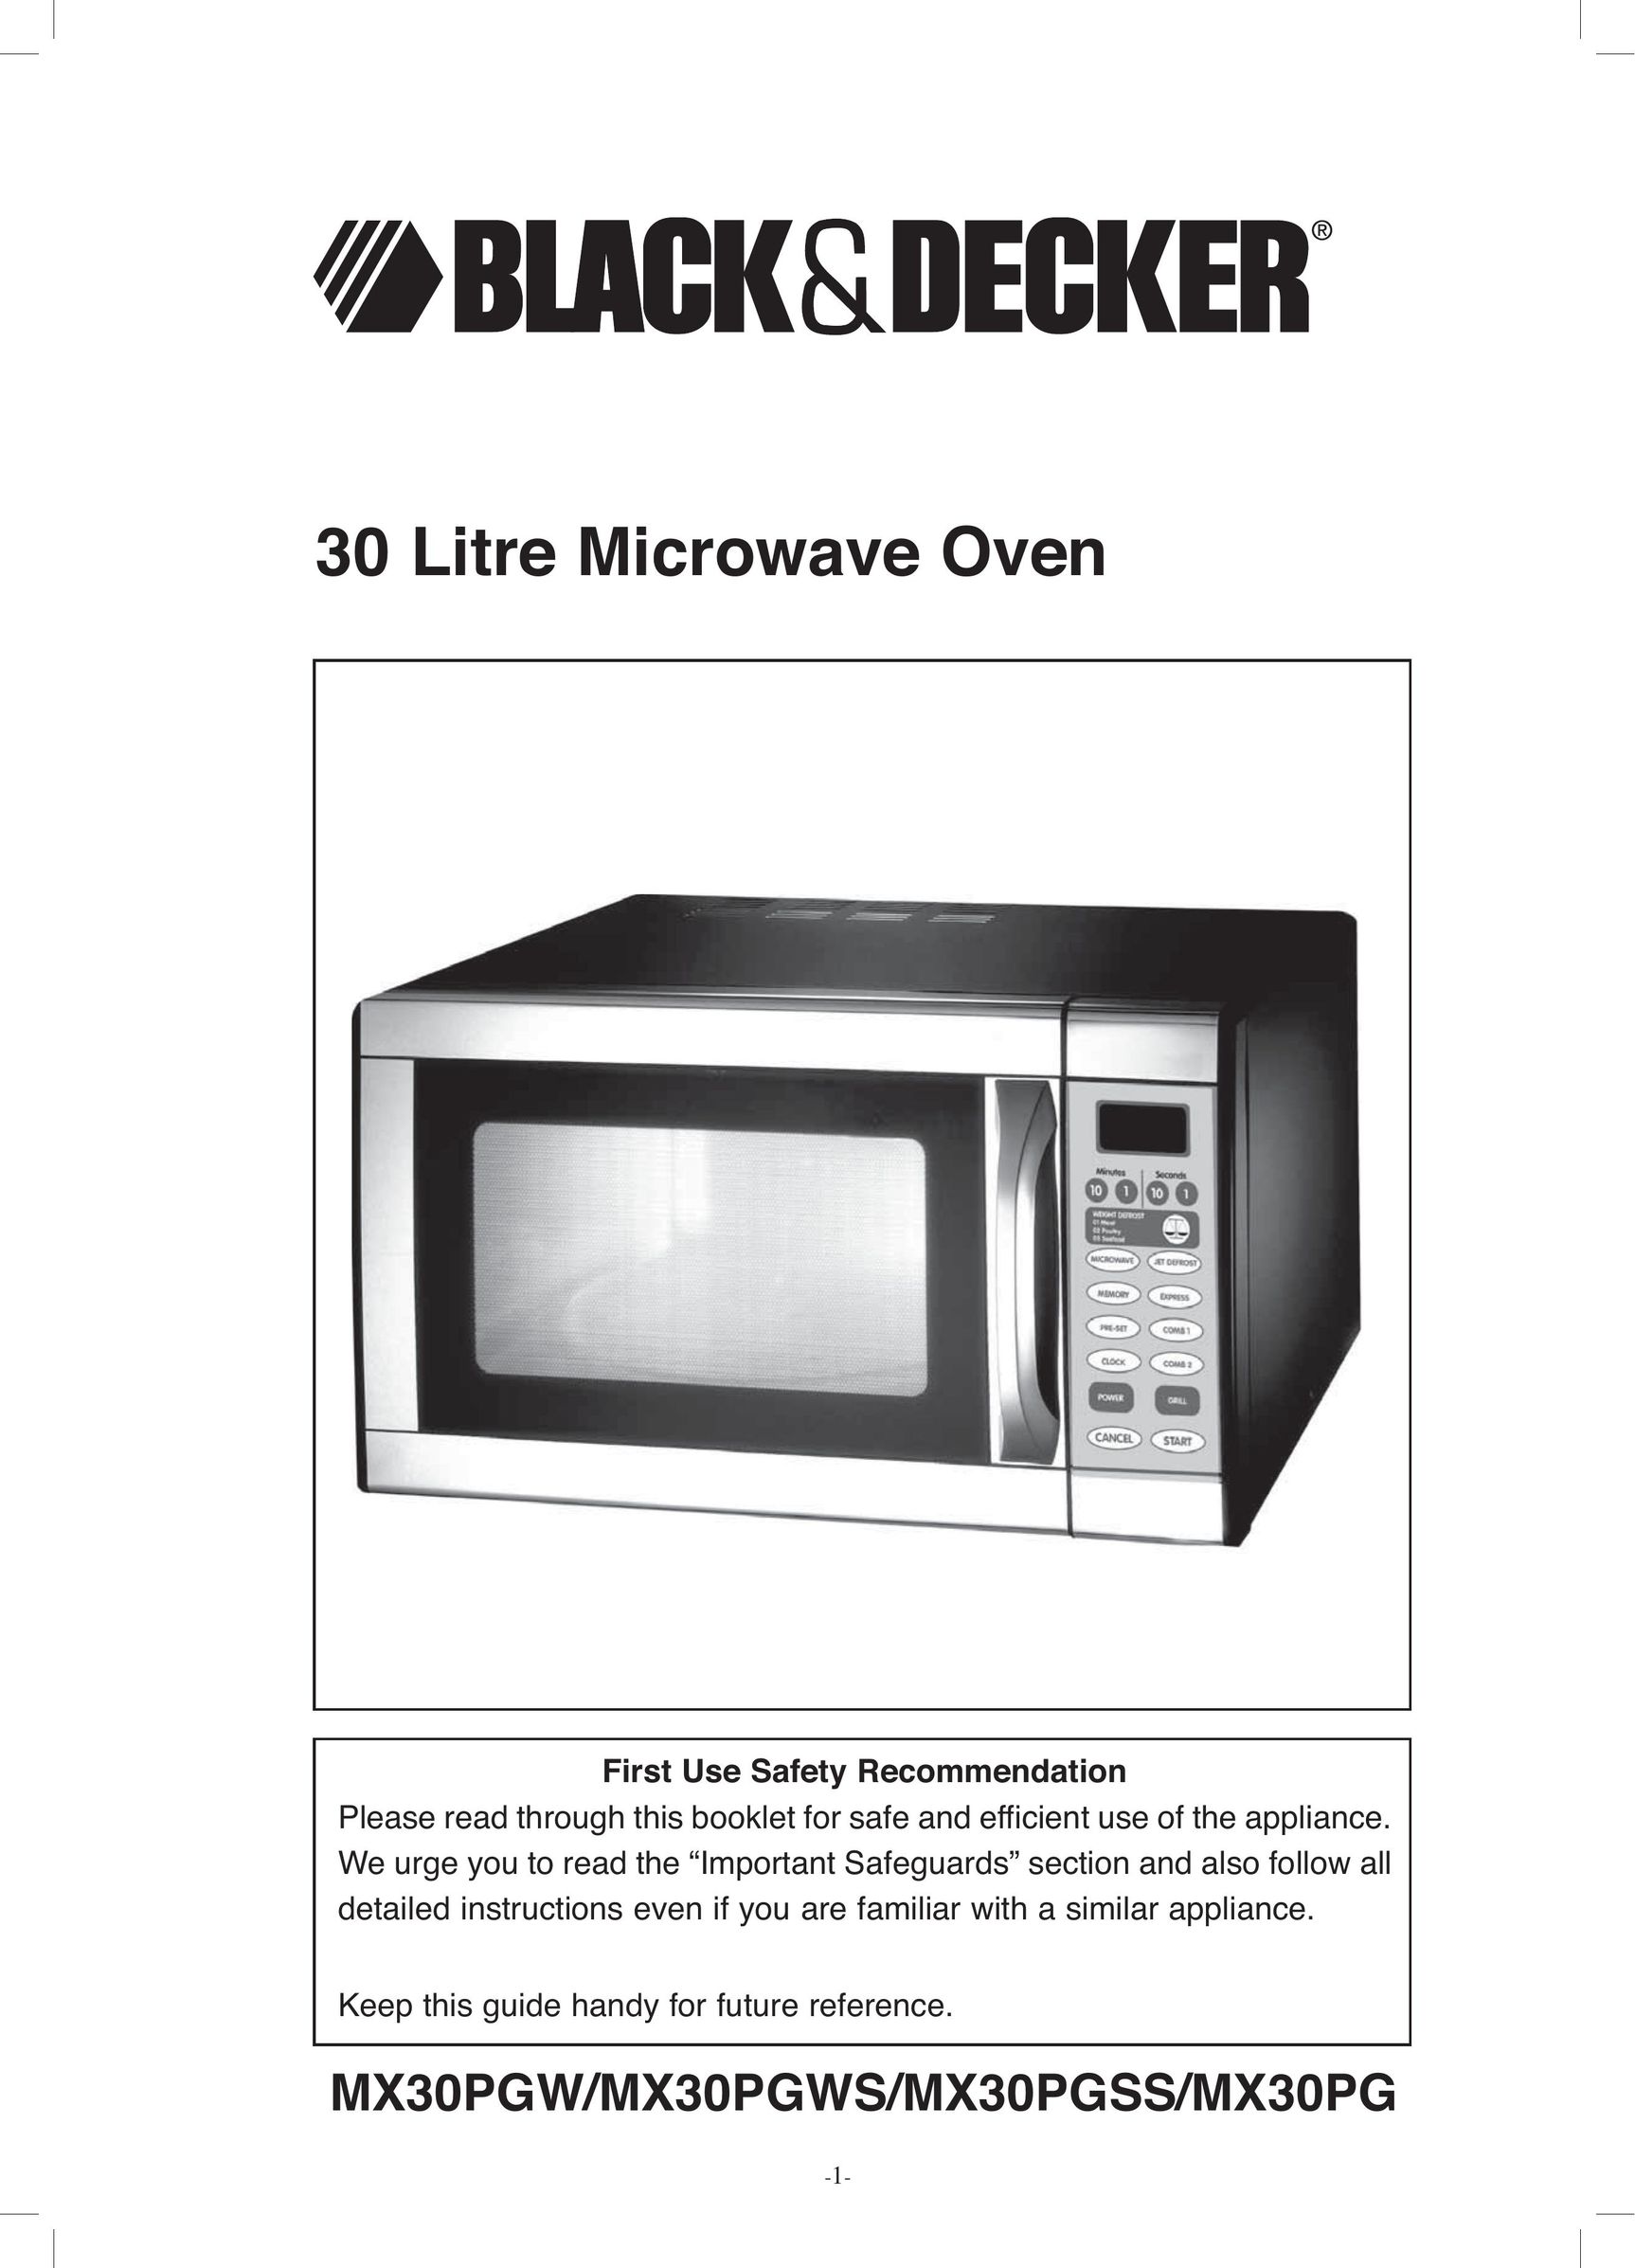 Black & Decker MX30PGWS Microwave Oven User Manual